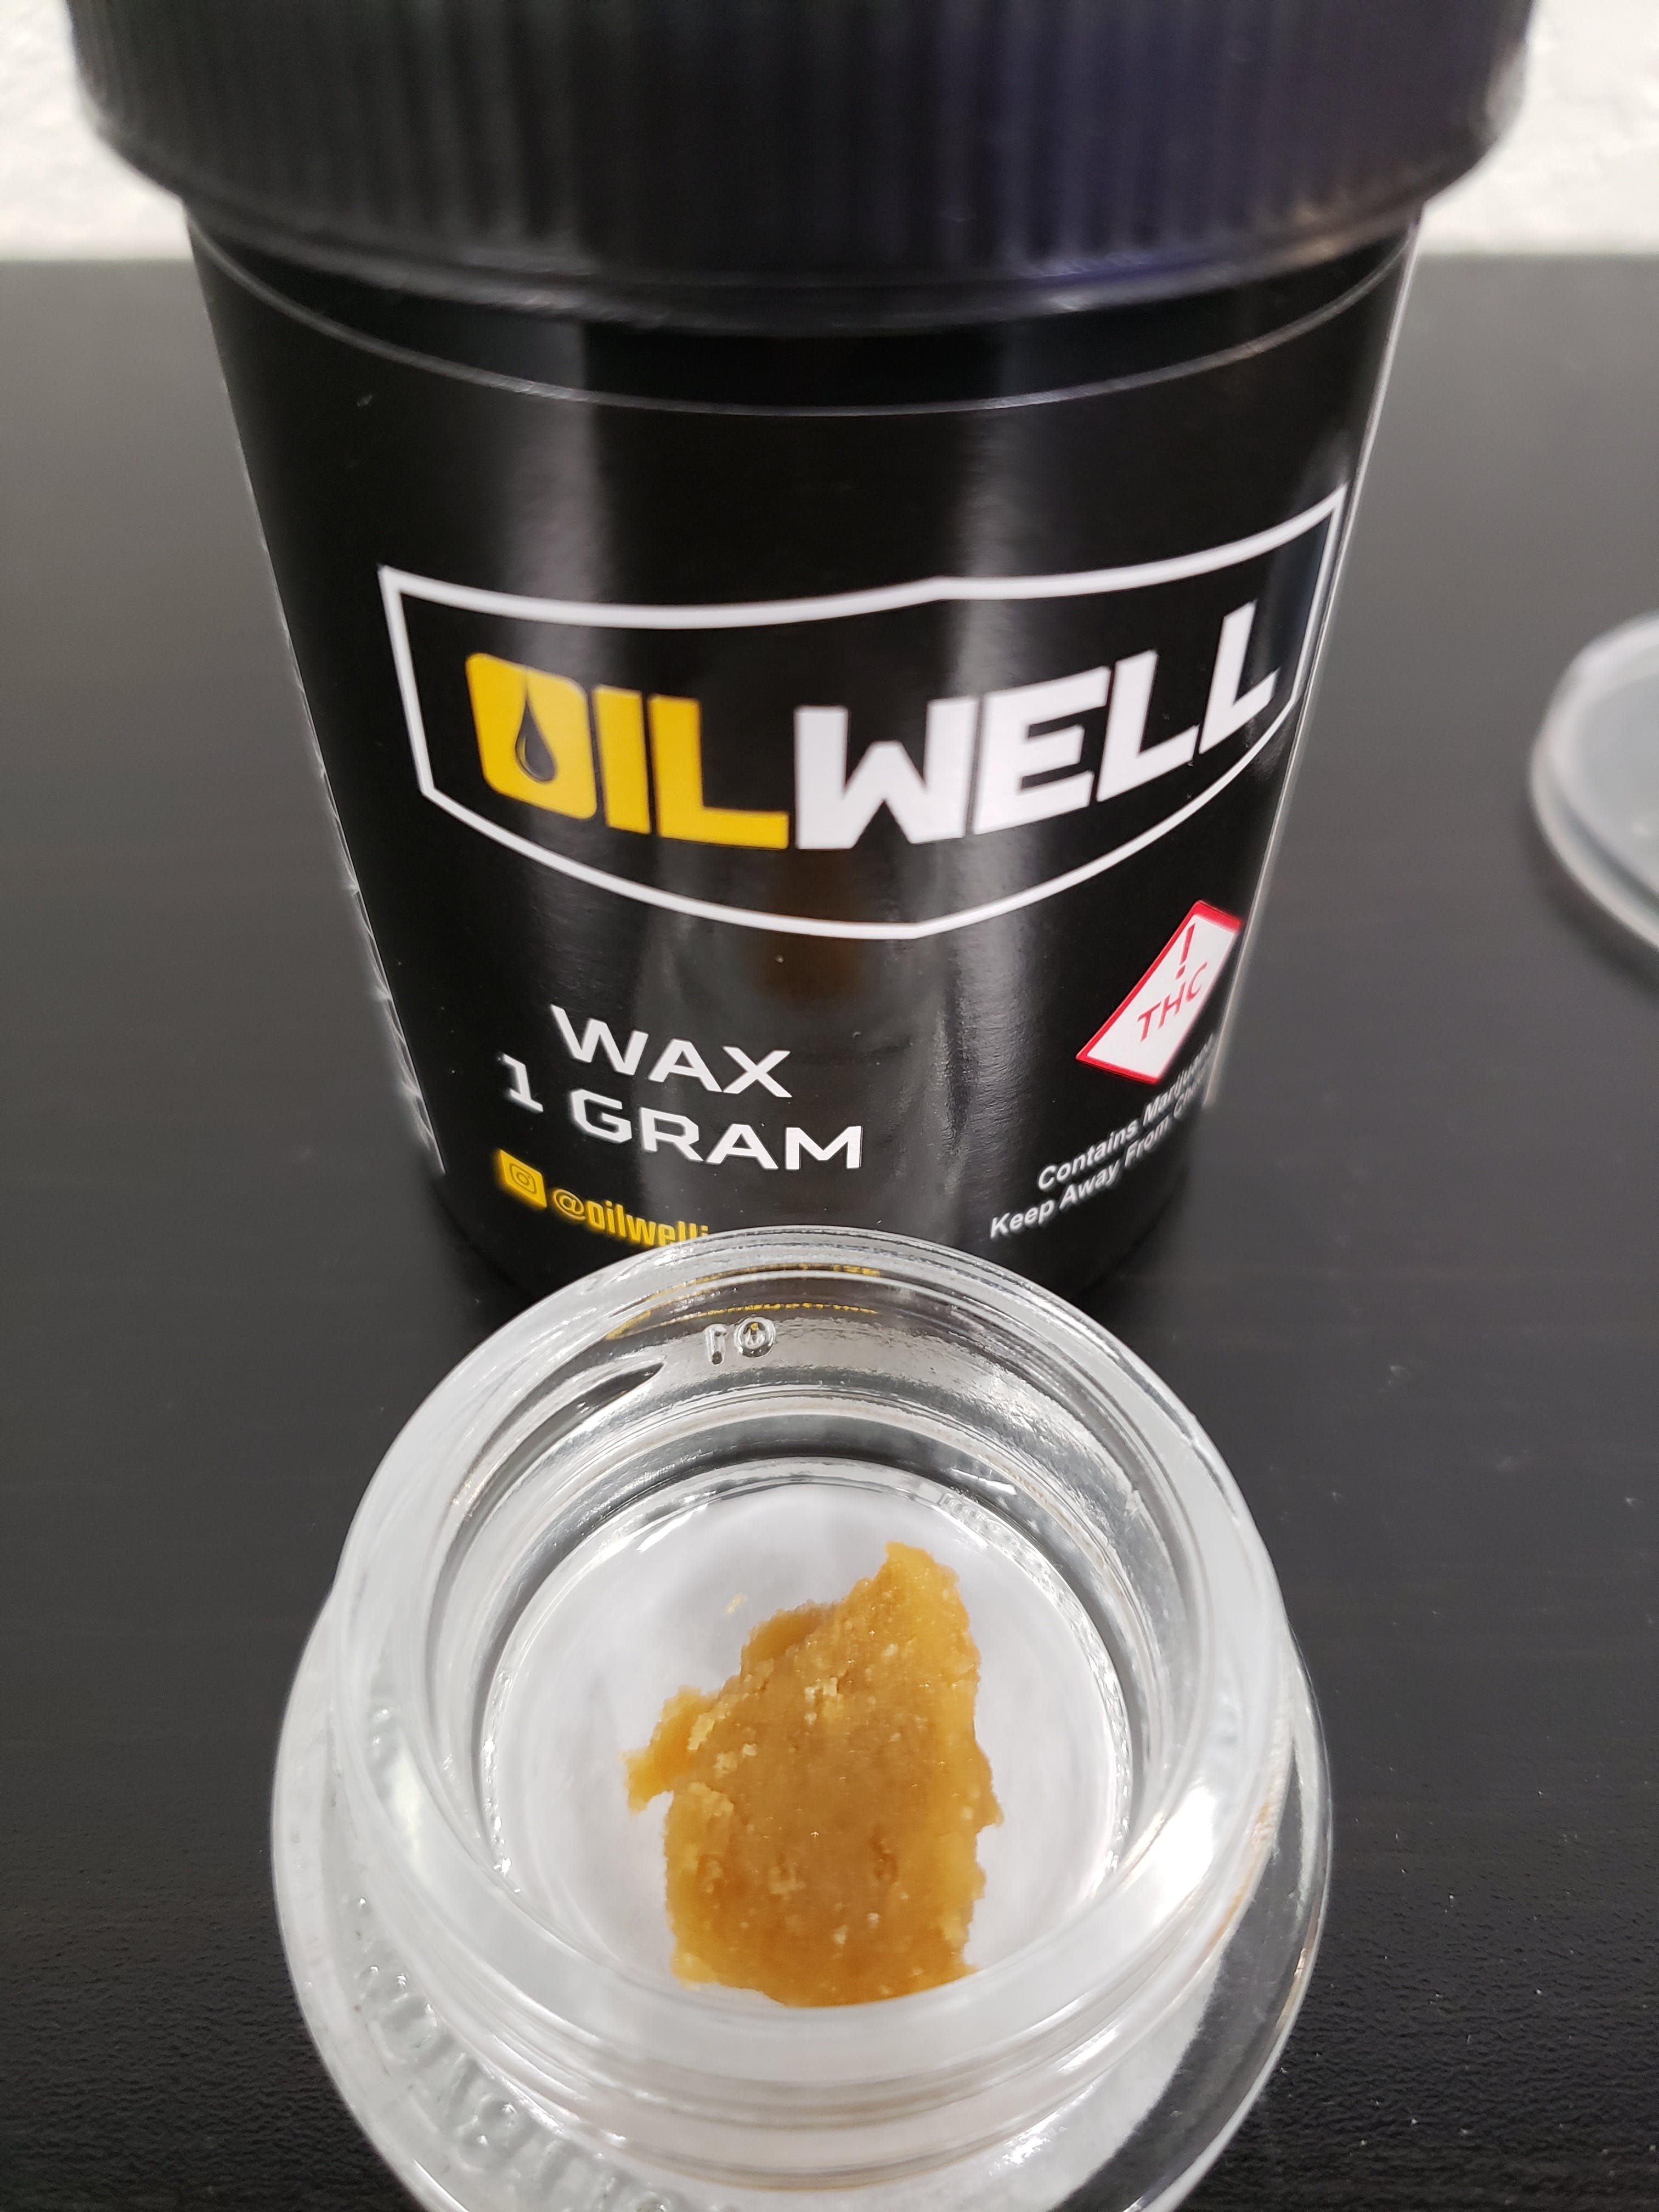 marijuana-dispensaries-mc-caregivers-in-colorado-springs-oil-well-wax